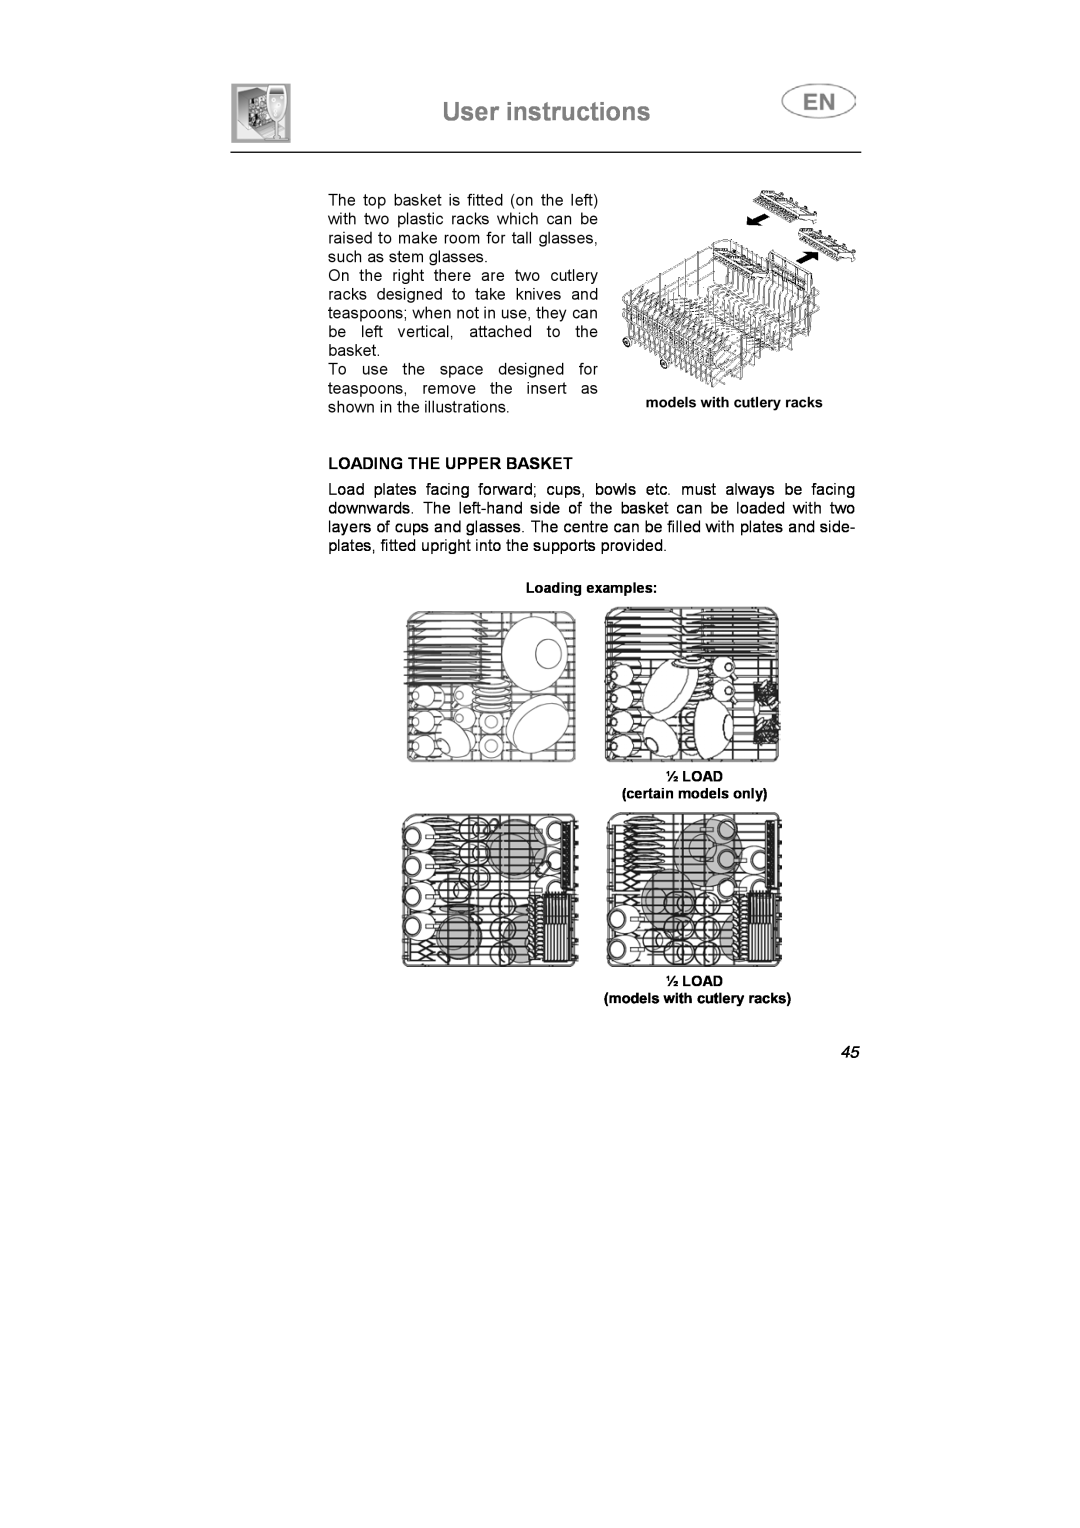 Smeg LS6147XH7 instruction manual User instructions, Loading The Upper Basket 